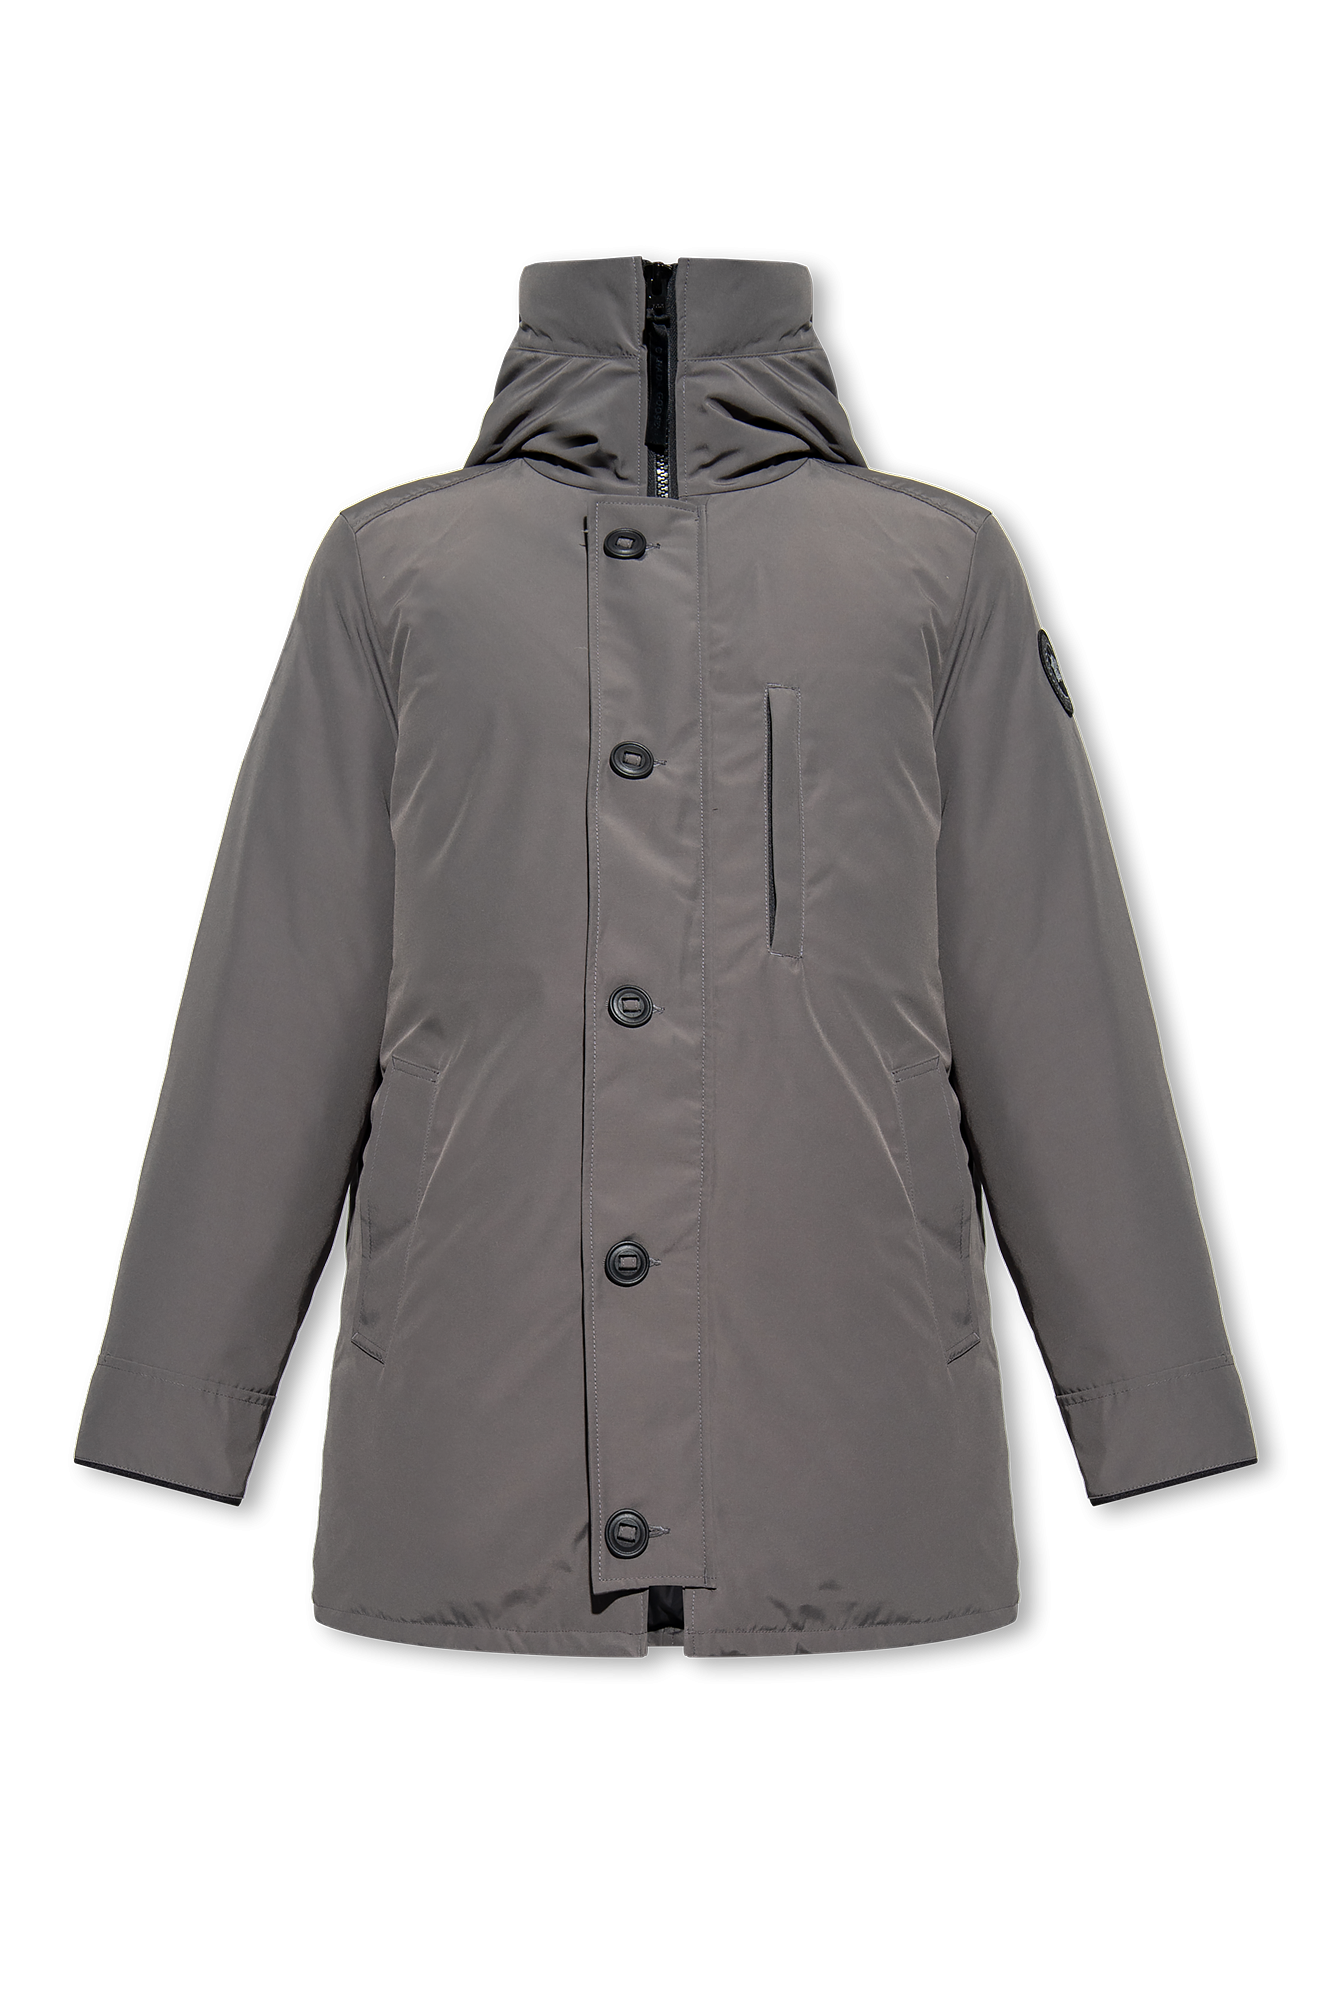 Grey 'Chateau' down jacket Canada Goose - Vitkac Canada